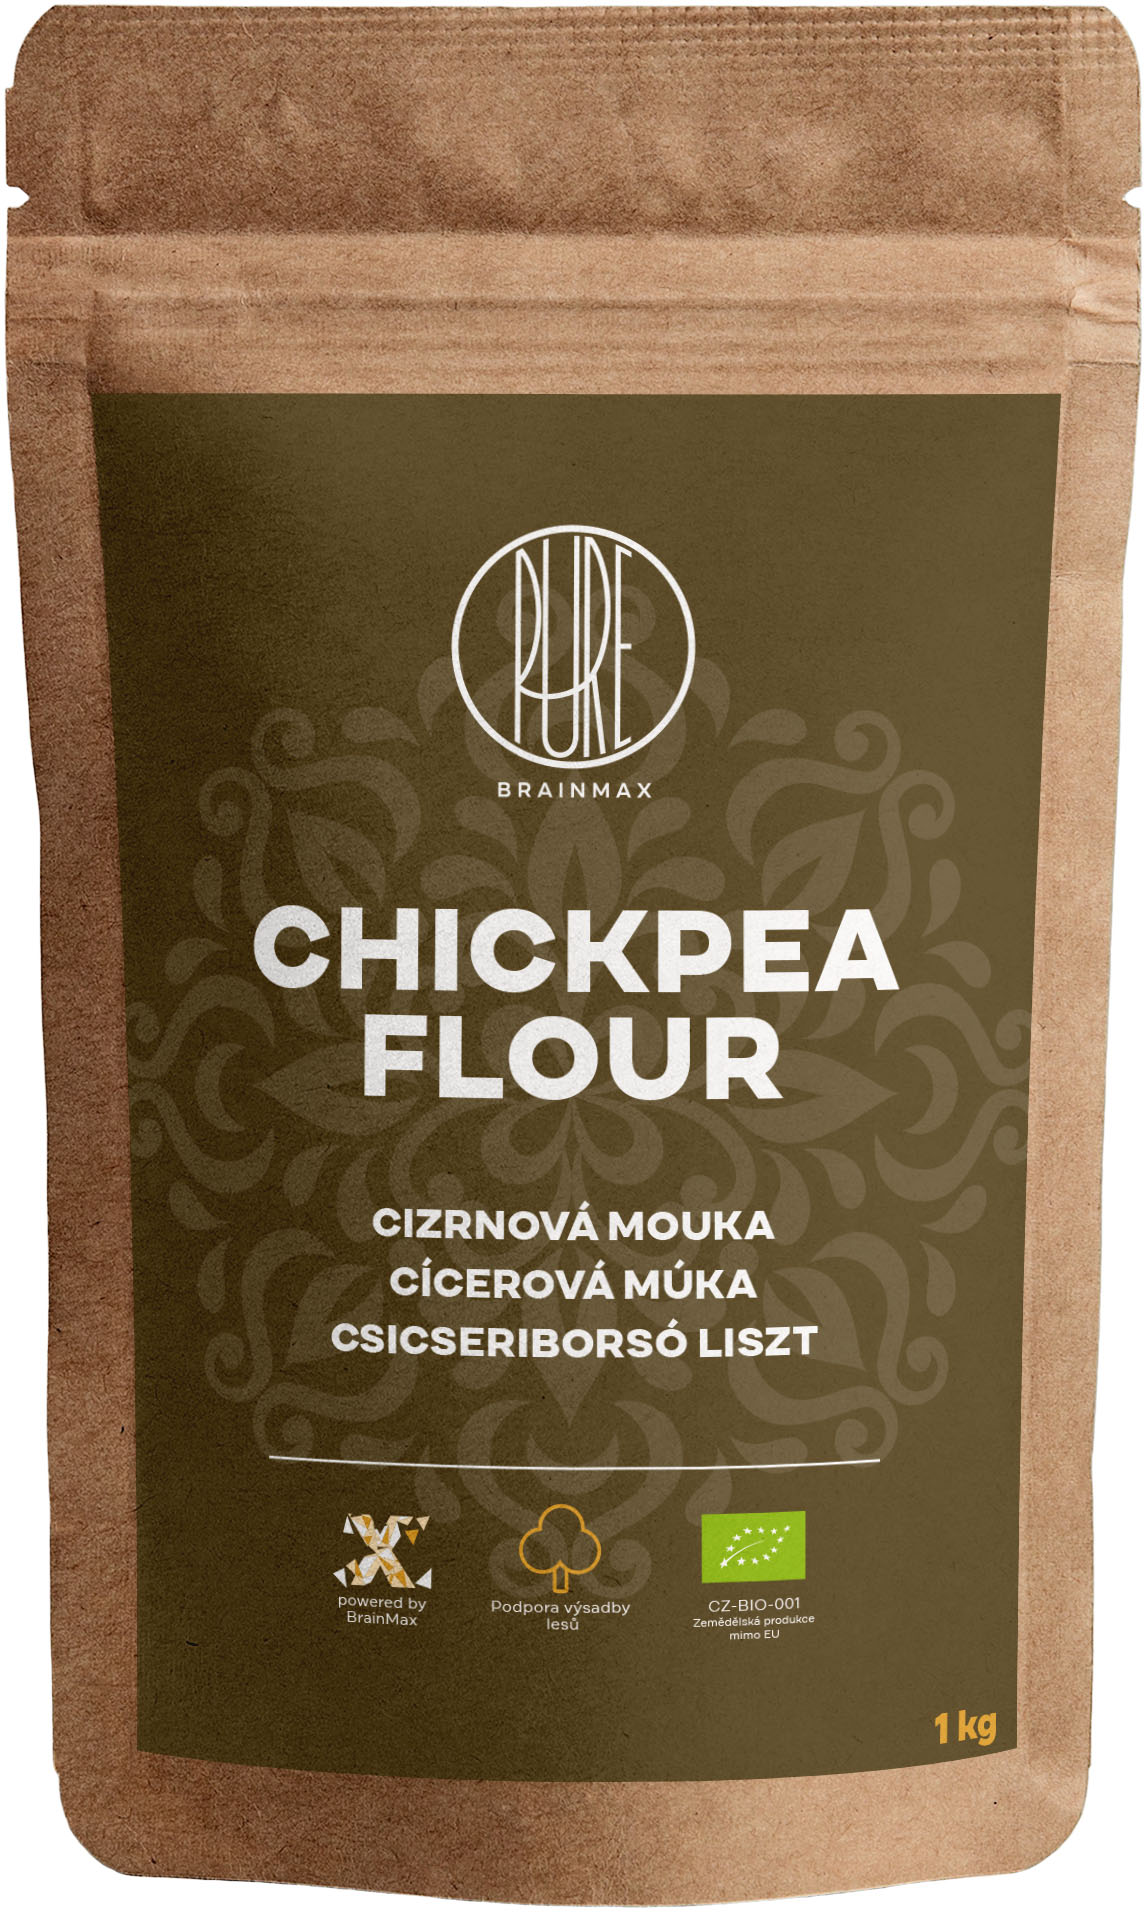 Levně BrainMax Pure Chickpea Flour, Cizrnová mouka BIO, 1 kg *CZ-BIO-001 certifikát